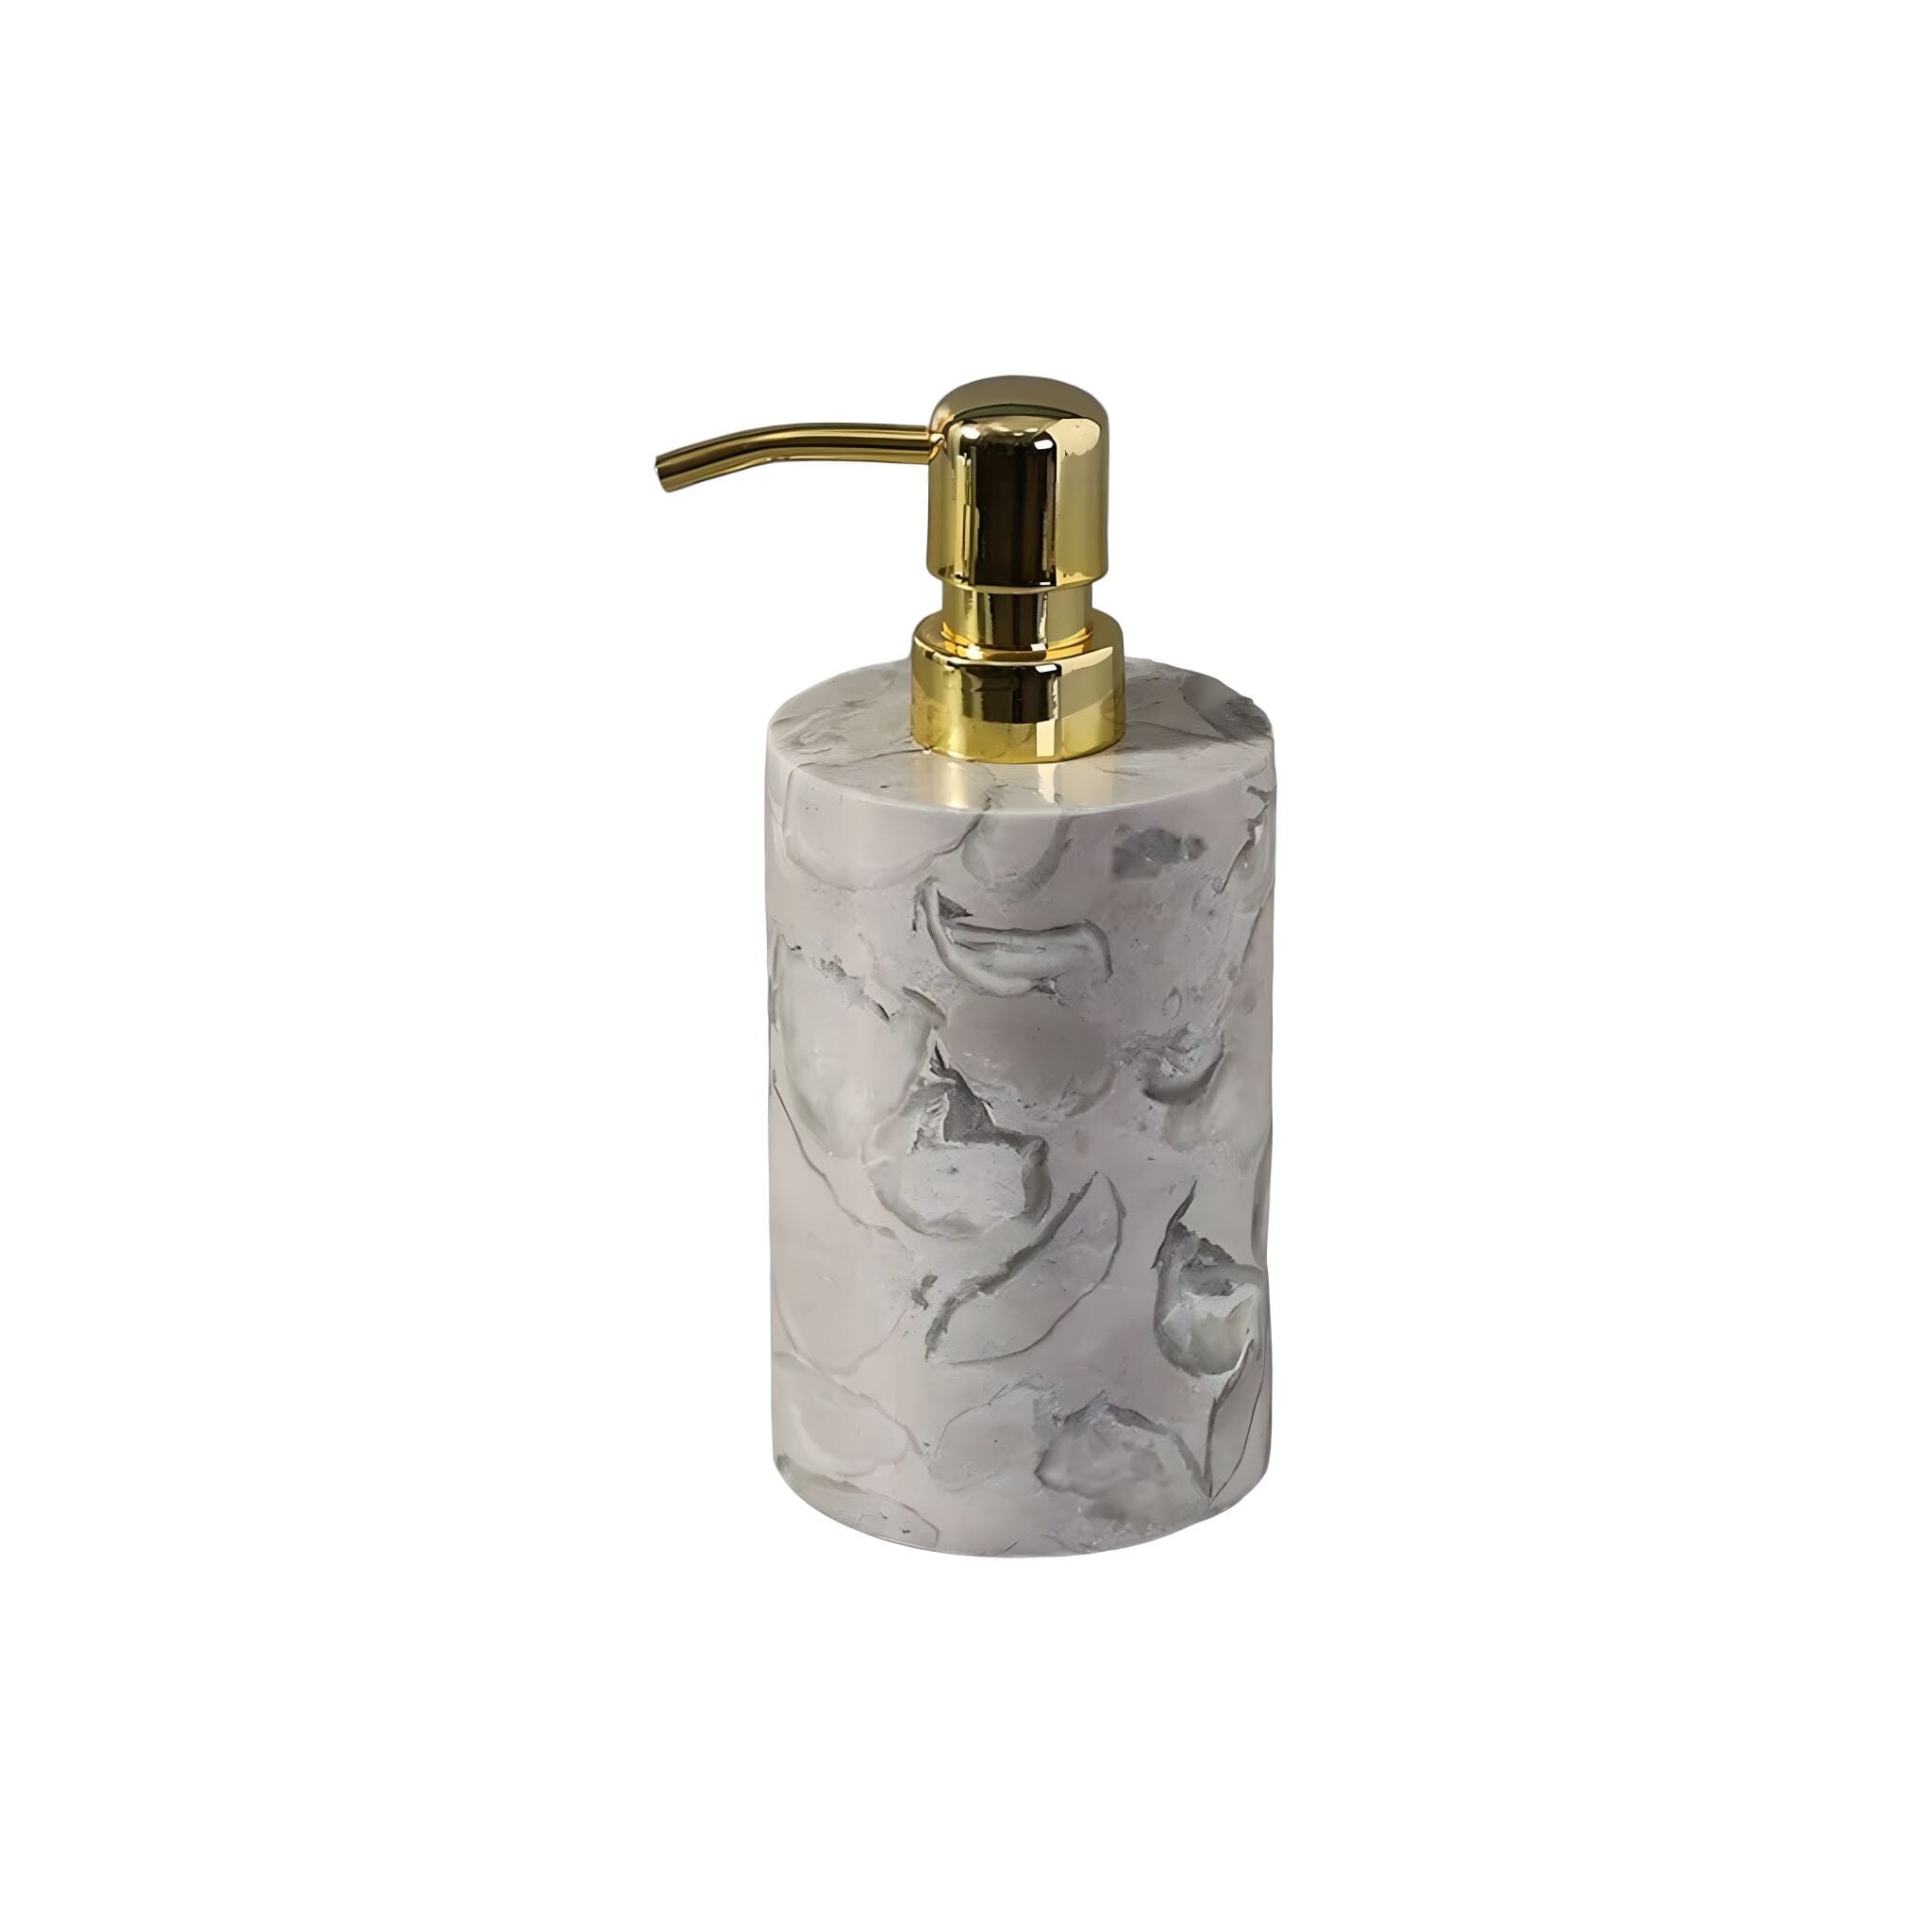 Odette Bathroom Accessories Collection Bathroom Accessories Soap Dispenser (gold) 